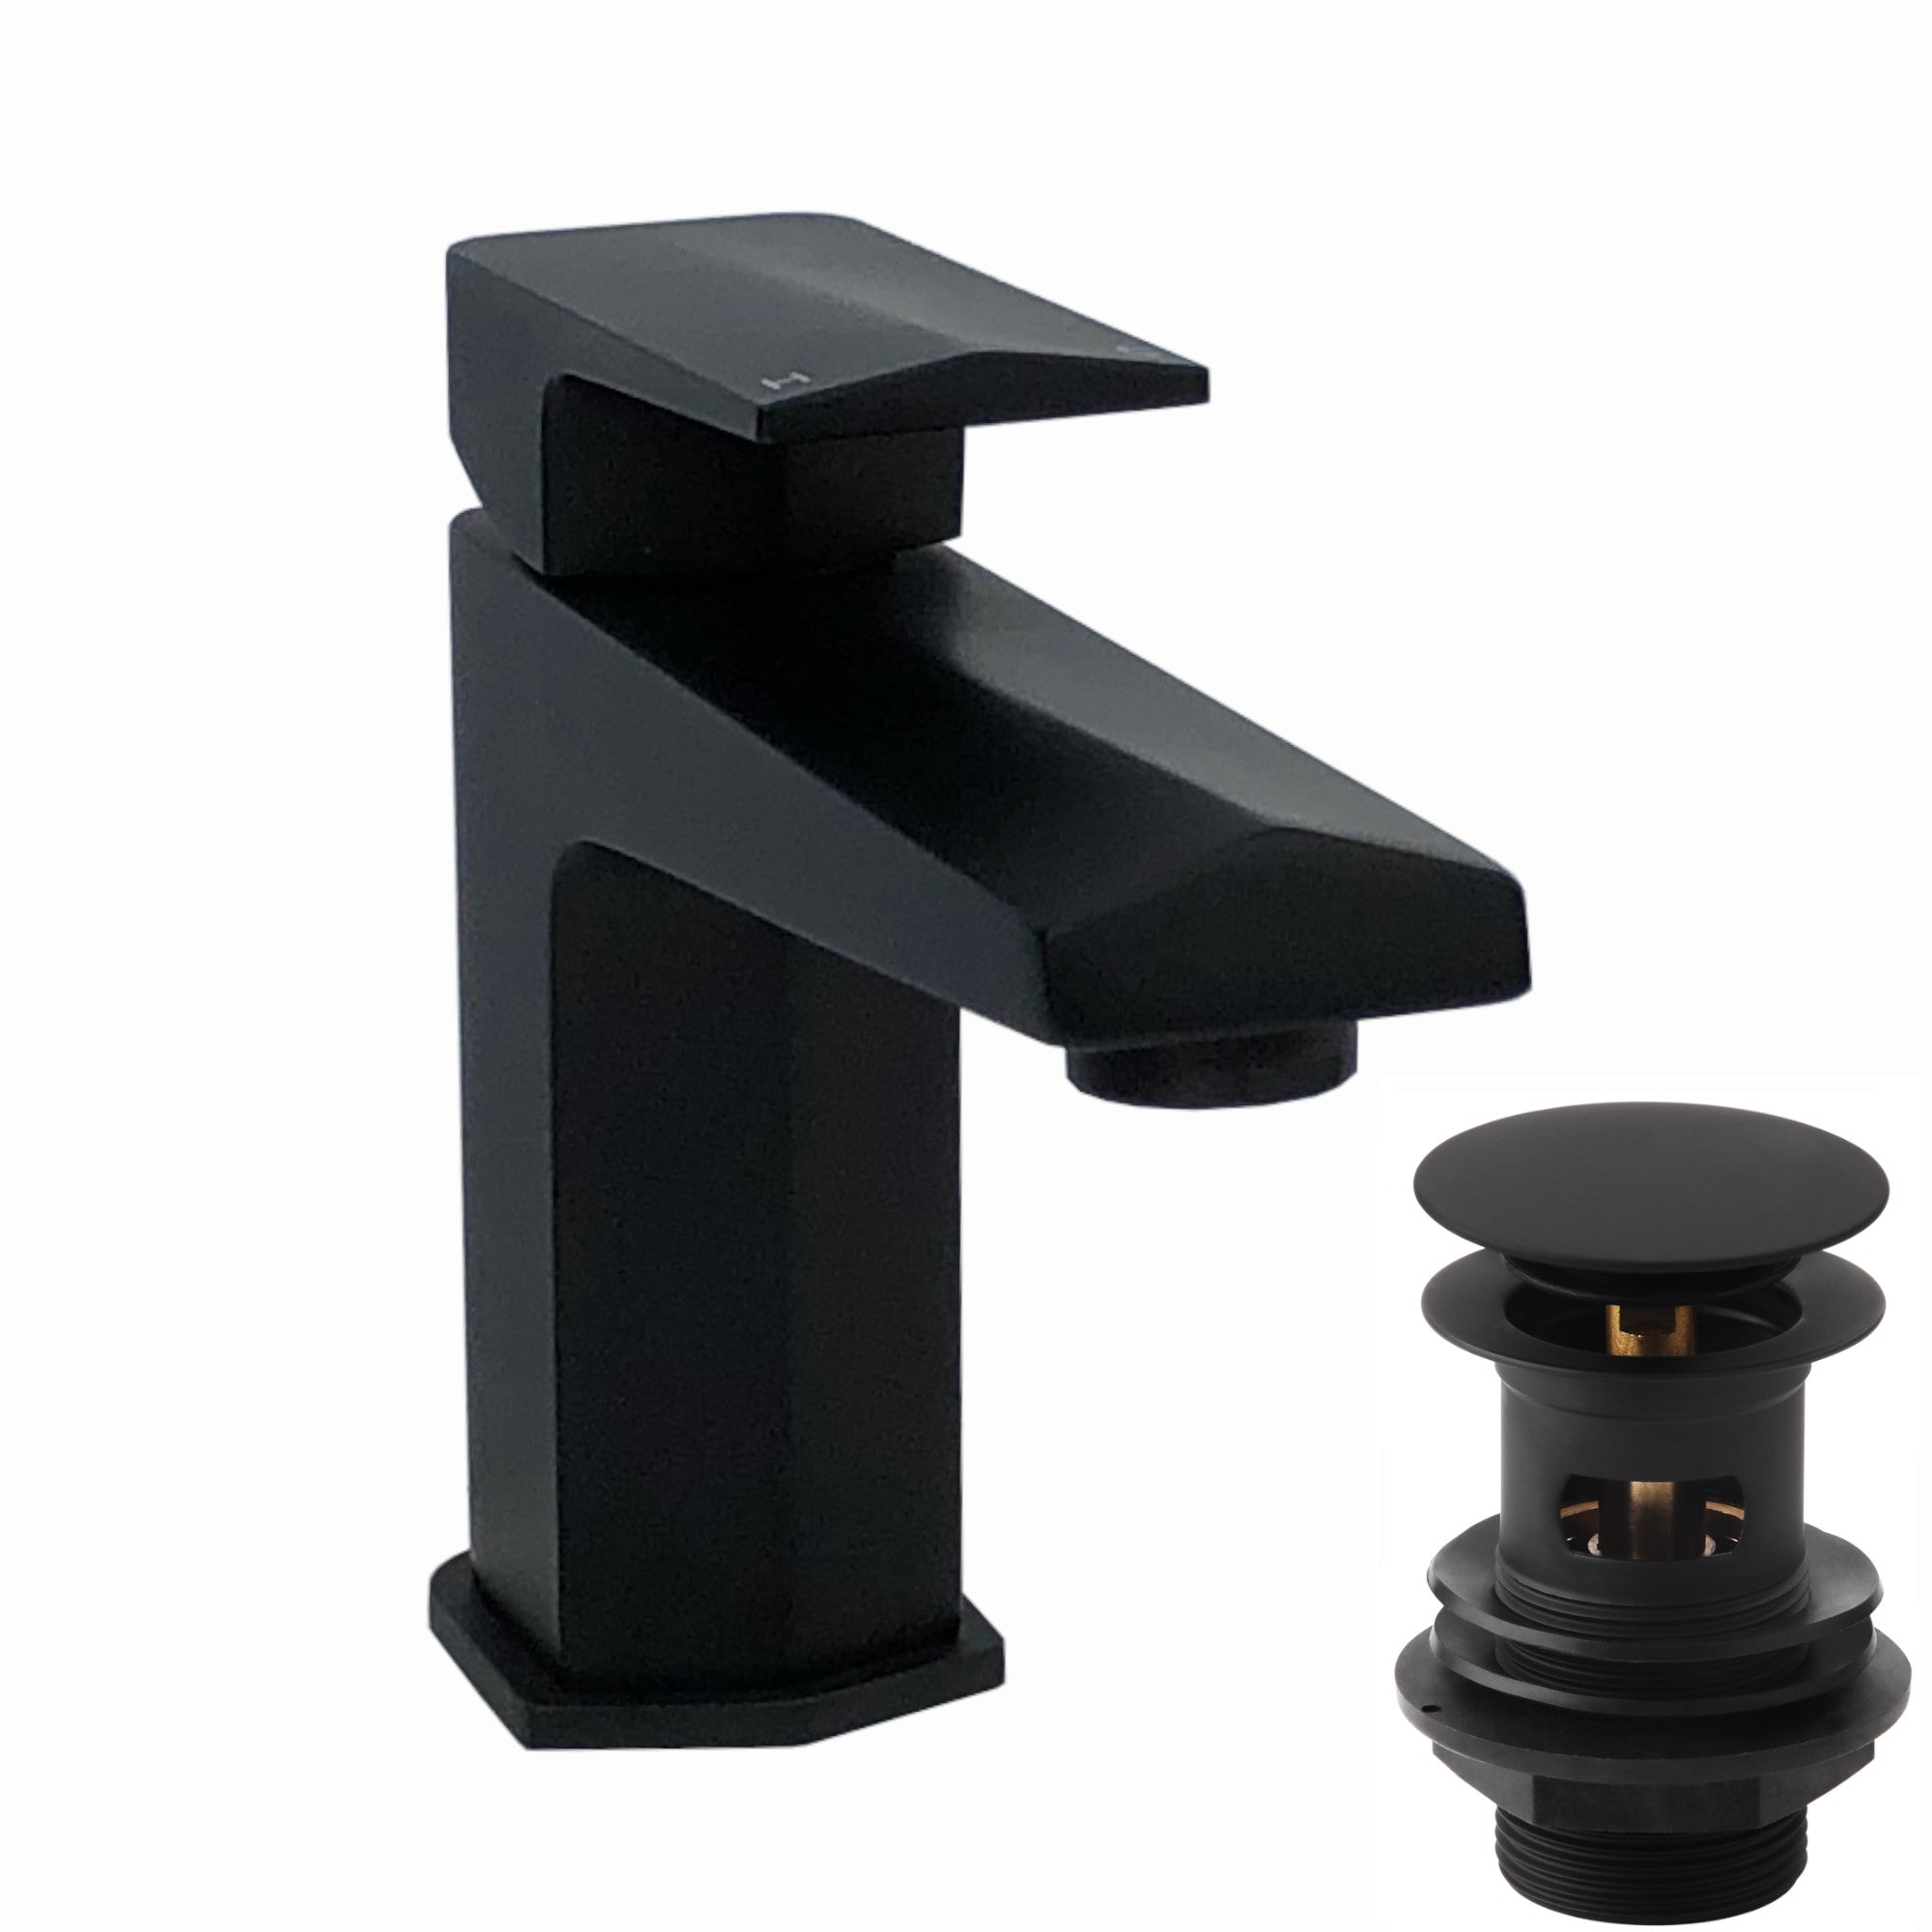 Milly geo inspired hexagonal basin sink mixer tap + slotted waste - matte black